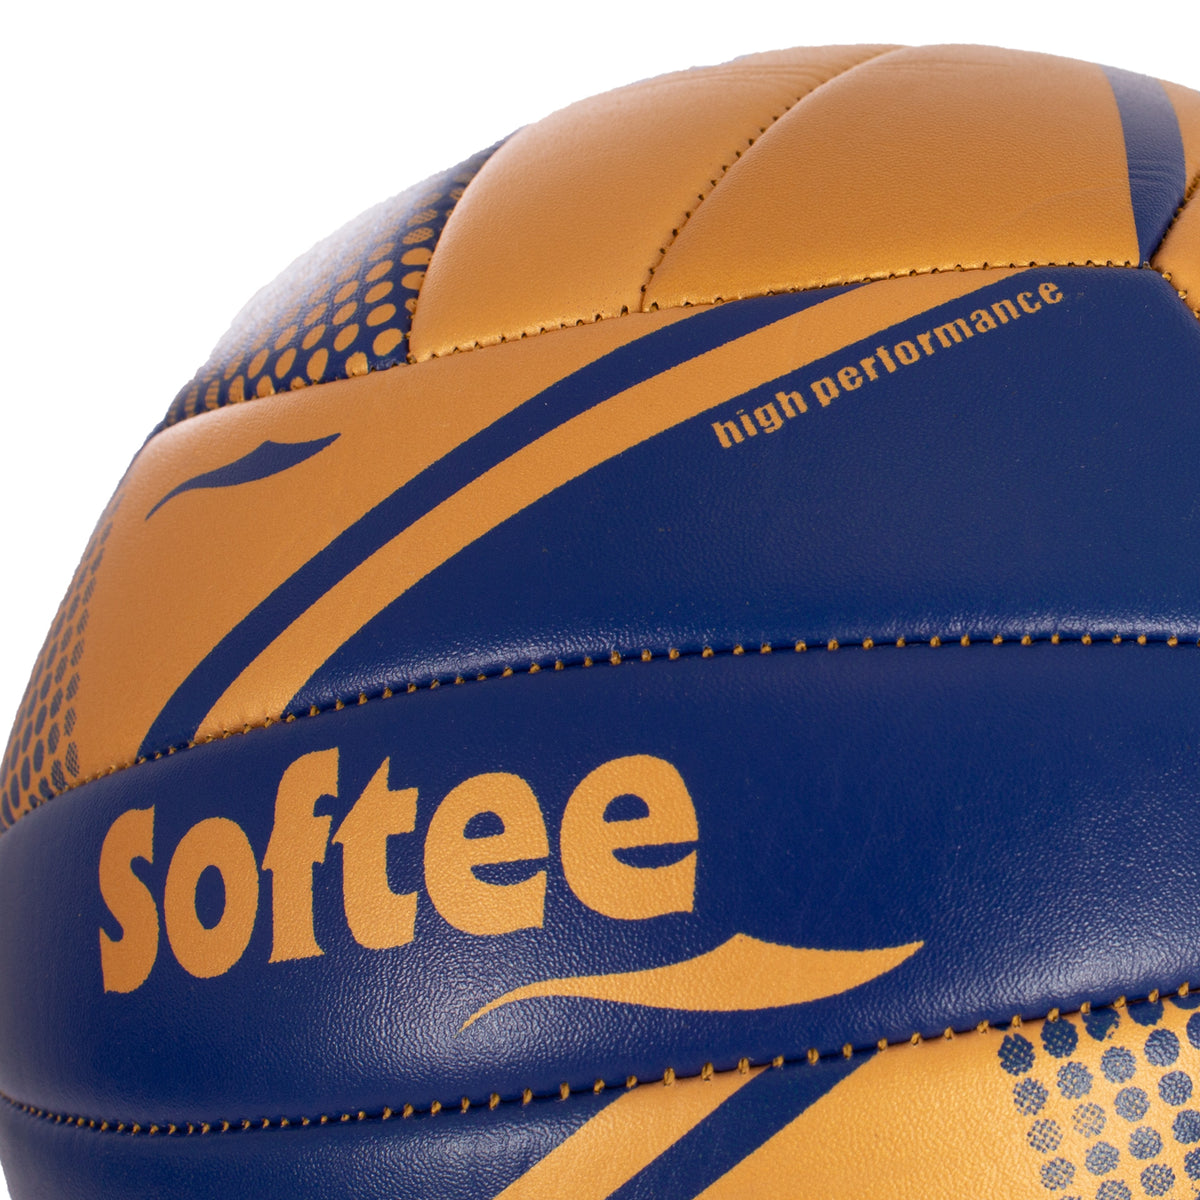 Balón Voleibol Softee Orix 5